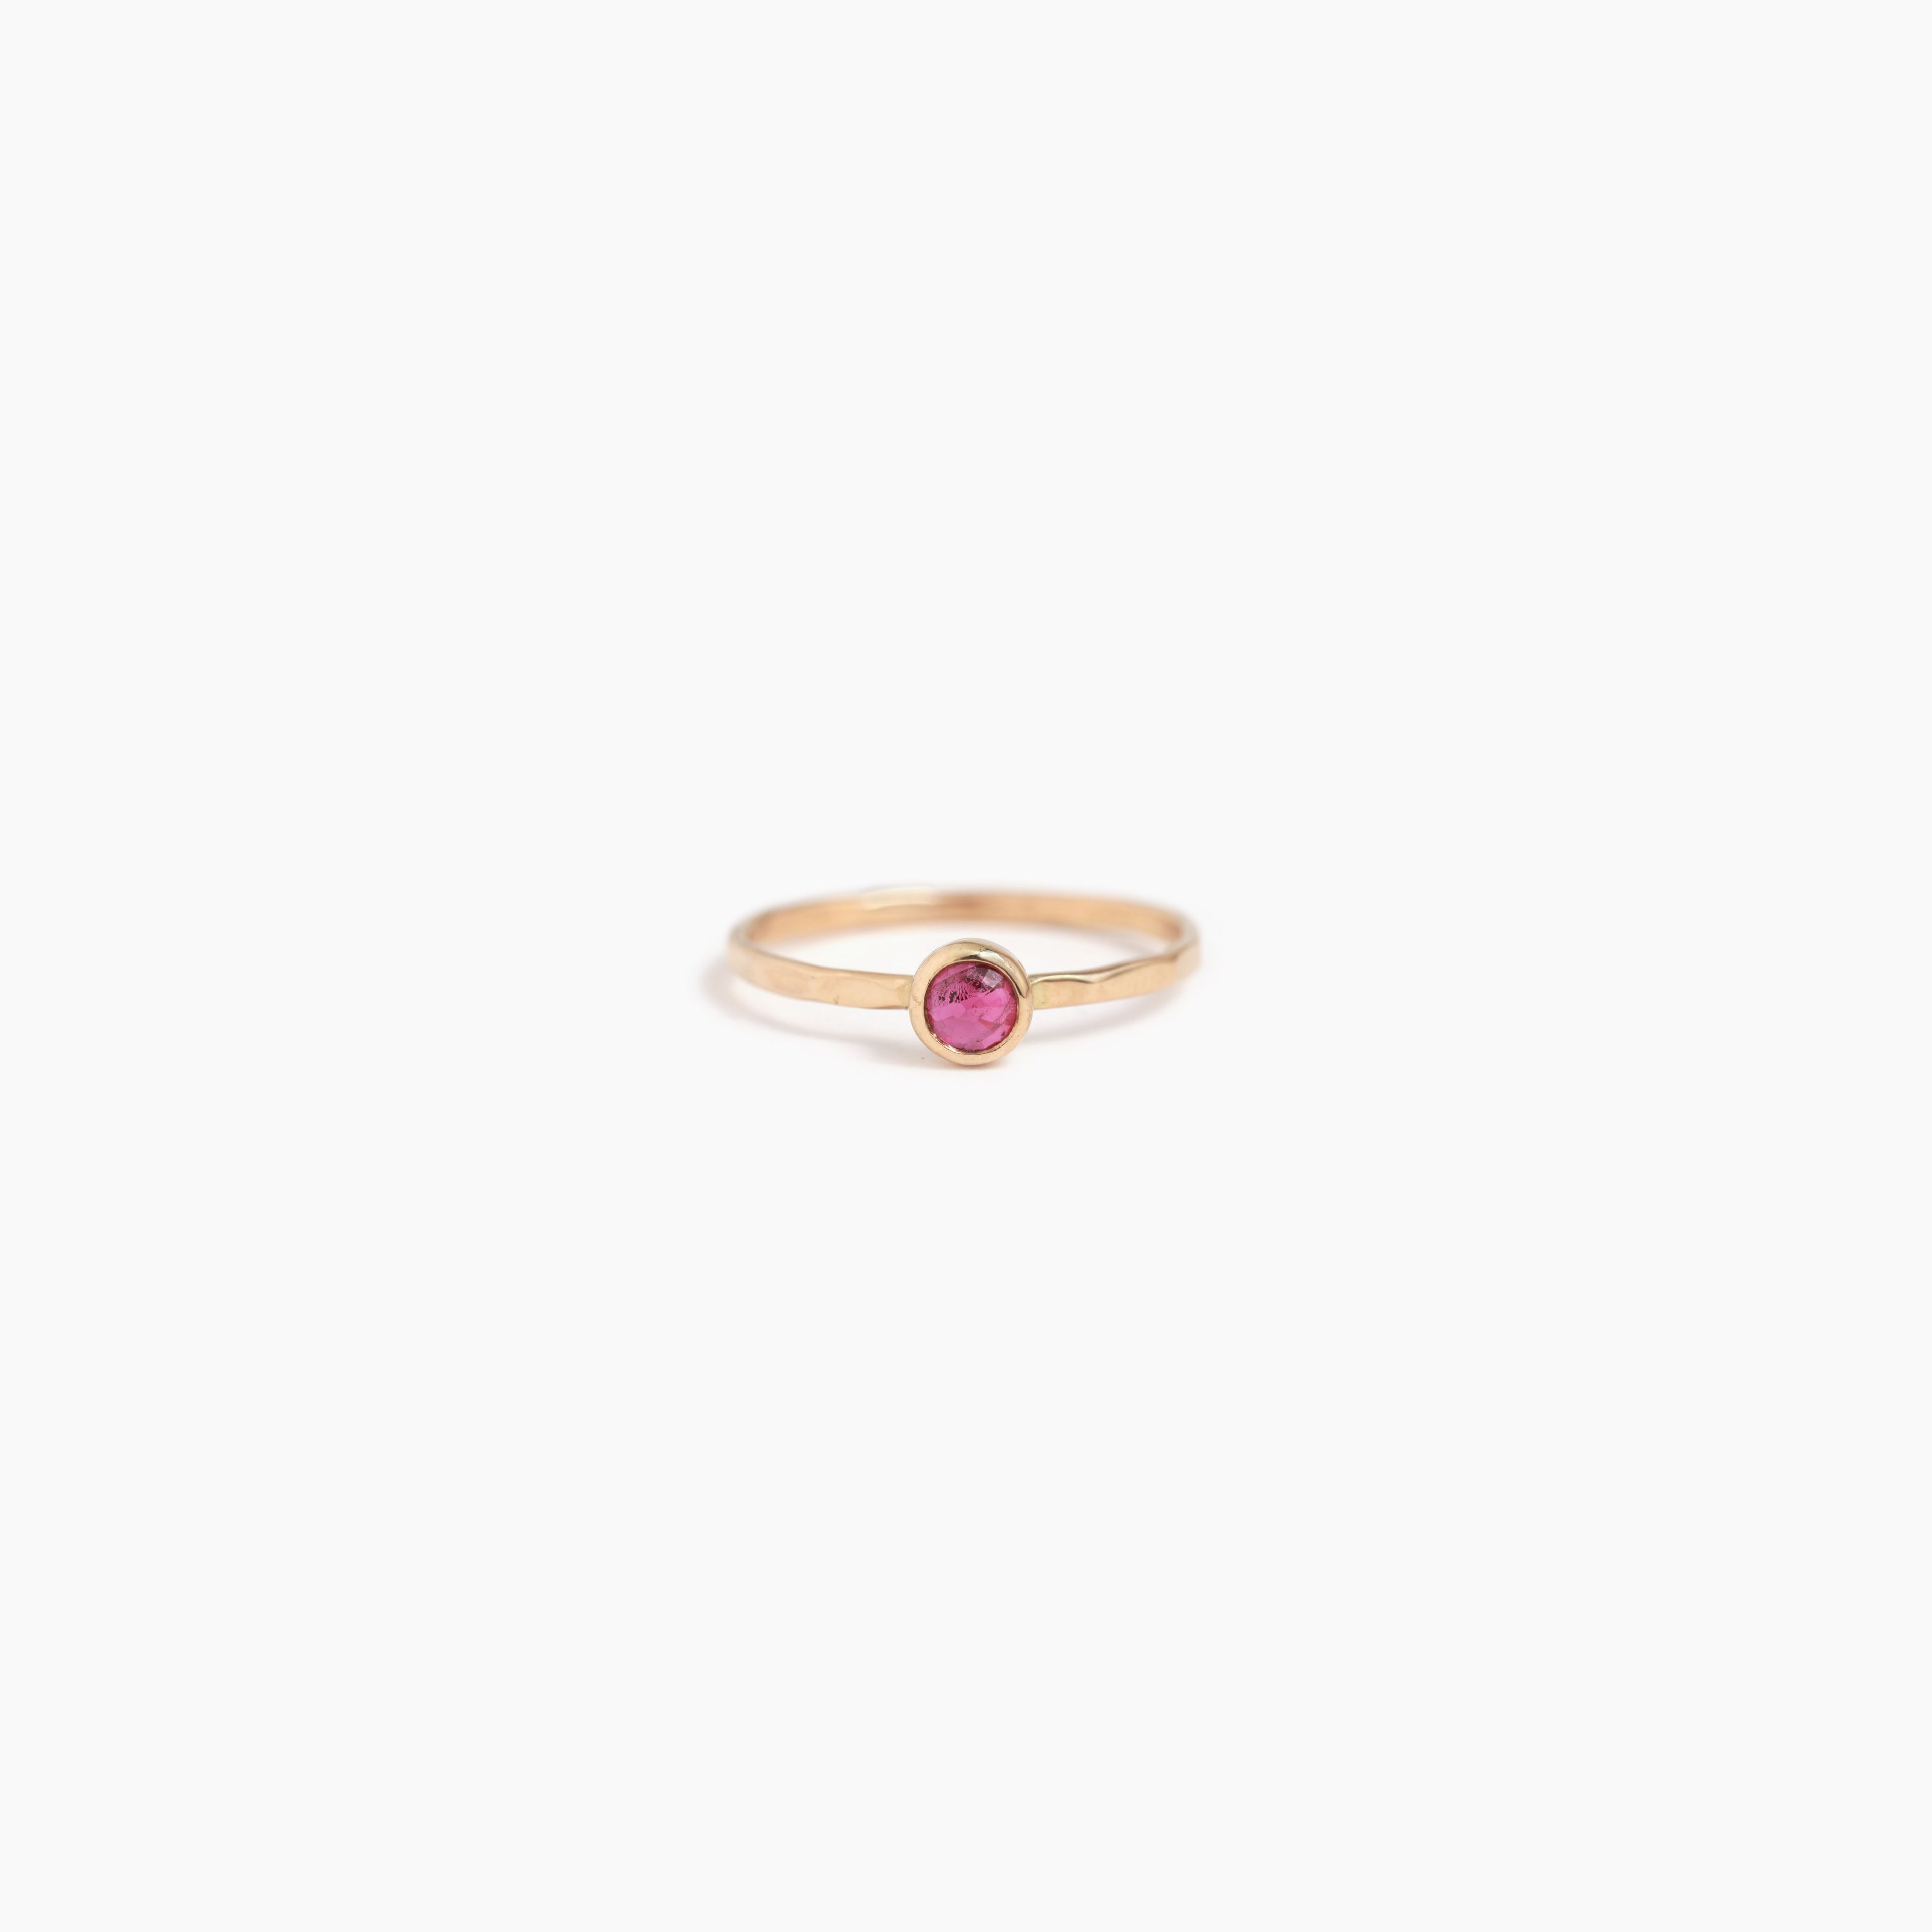 4.3mm Rosecut Ruby ring